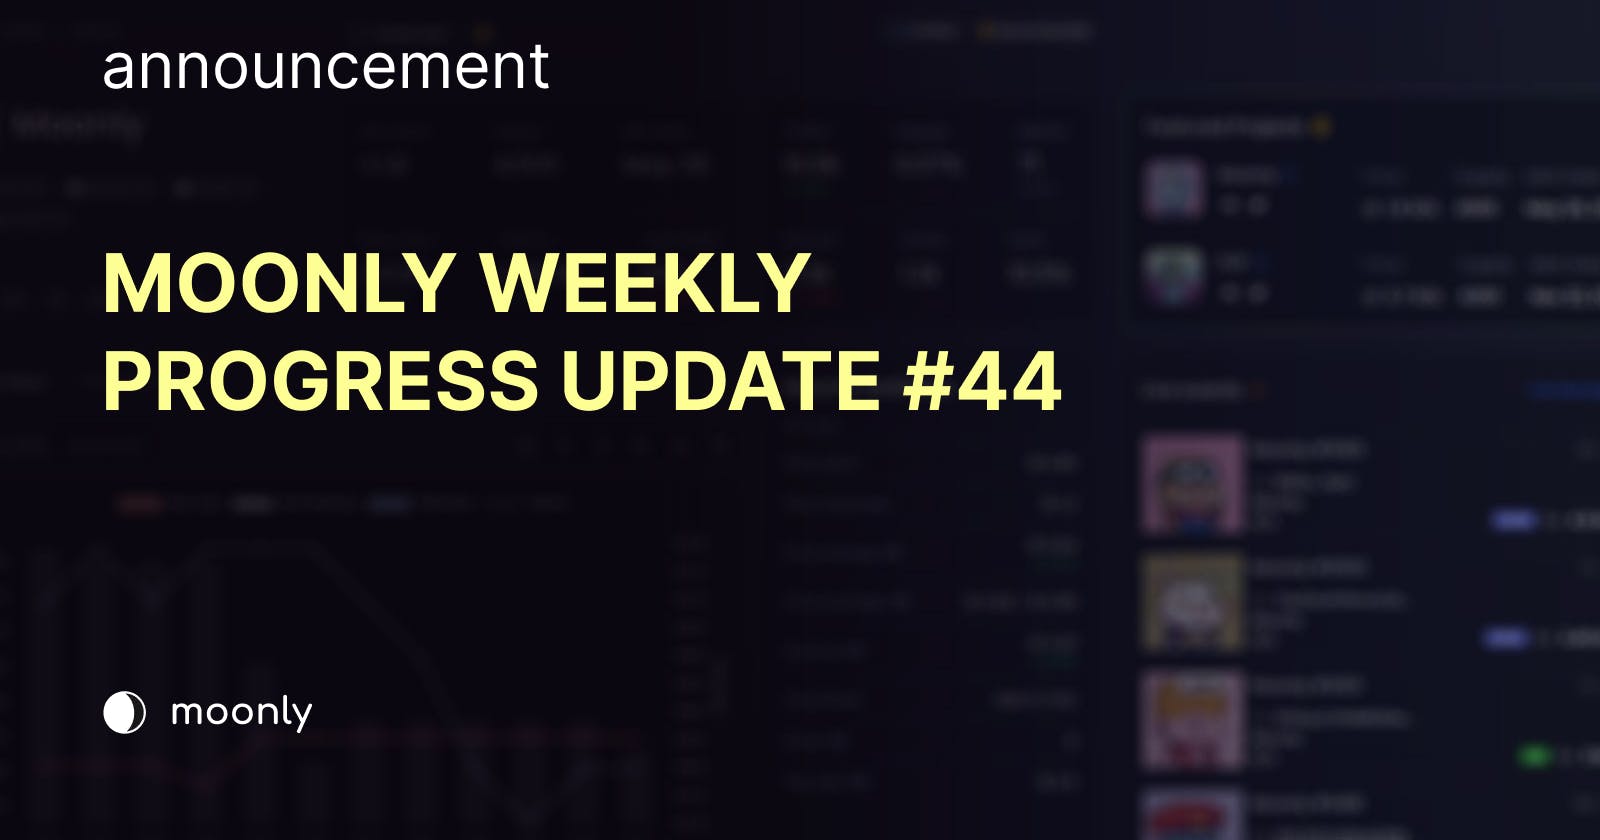 Moonly weekly progress update #44